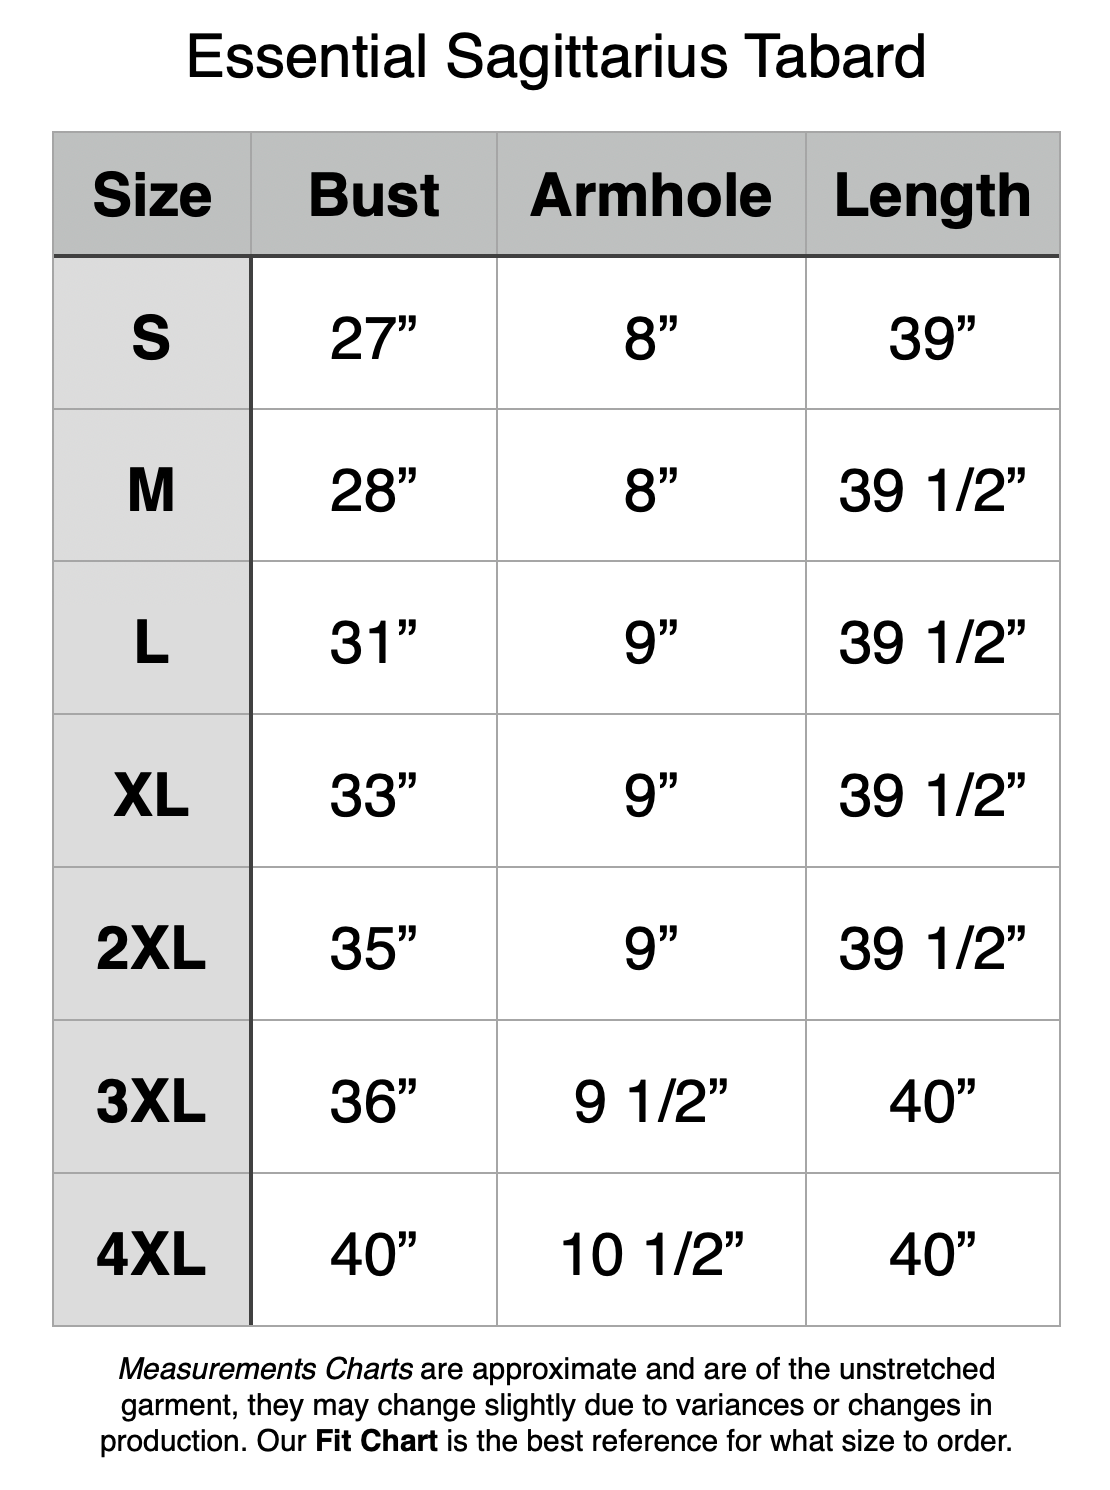 Essential Sagittarius Tabard - Forest Spirit Green . S - 27” Bust, 8” Armhole, 39” Length. M - 28” Bust, 8” Armhole, 39.5” Length. L - 31” Bust, 9” Armhole, 39.5” Length. XL - 33” Bust, 9” Armhole, 39.5” Length. 2XL - 35” Bust, 9” Armhole, 39.5” Length. 3XL - 36” Bust, 9.5” Armhole, 40” Length. 4XL - 40” Bust, 10.5” Armhole, 40” Length.